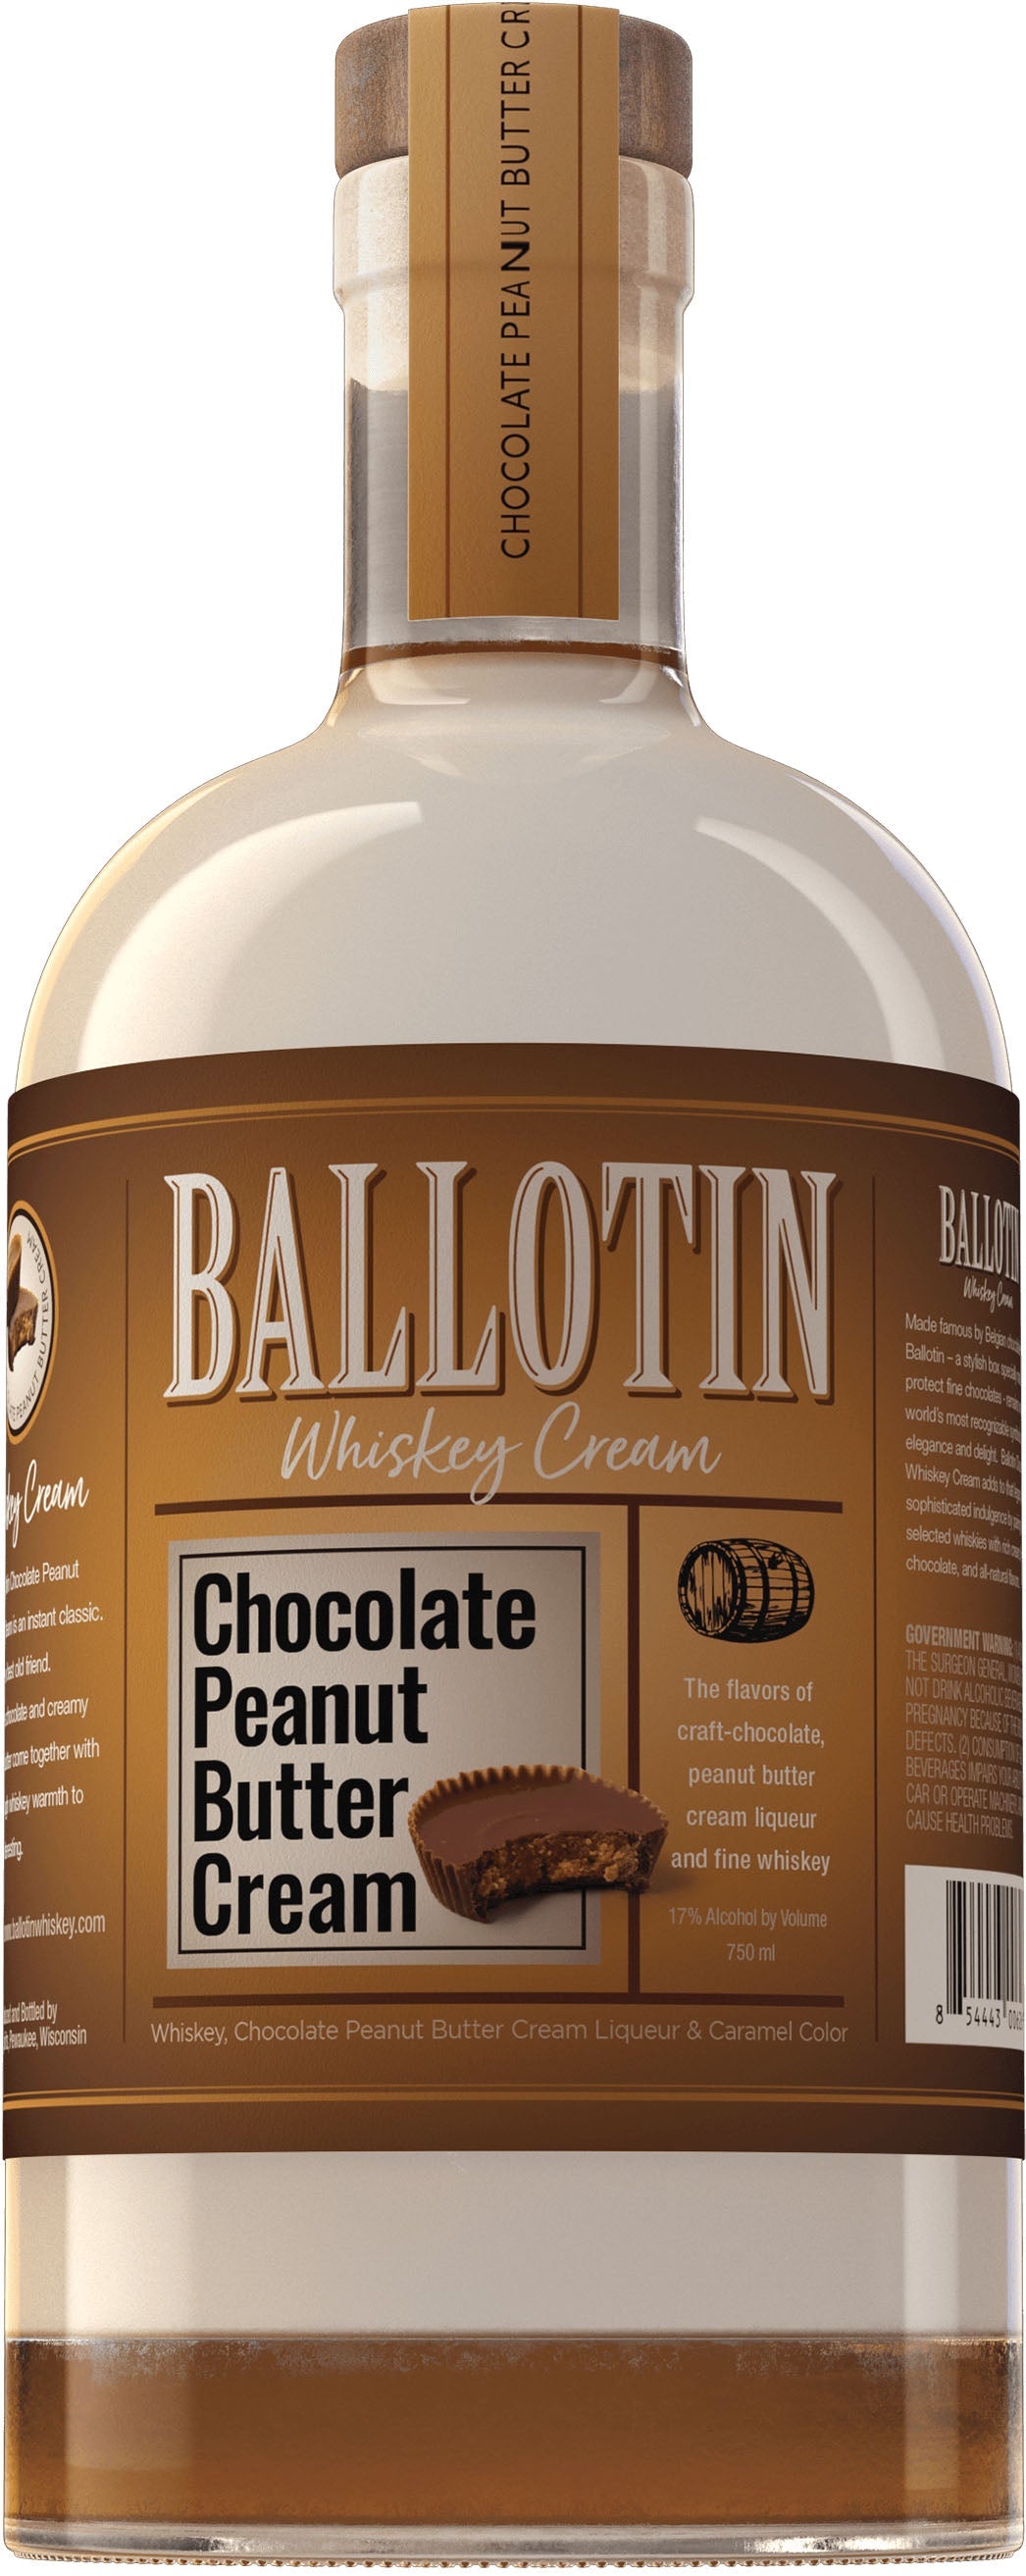 Ballotin Chocolate Peanute Butter Cream